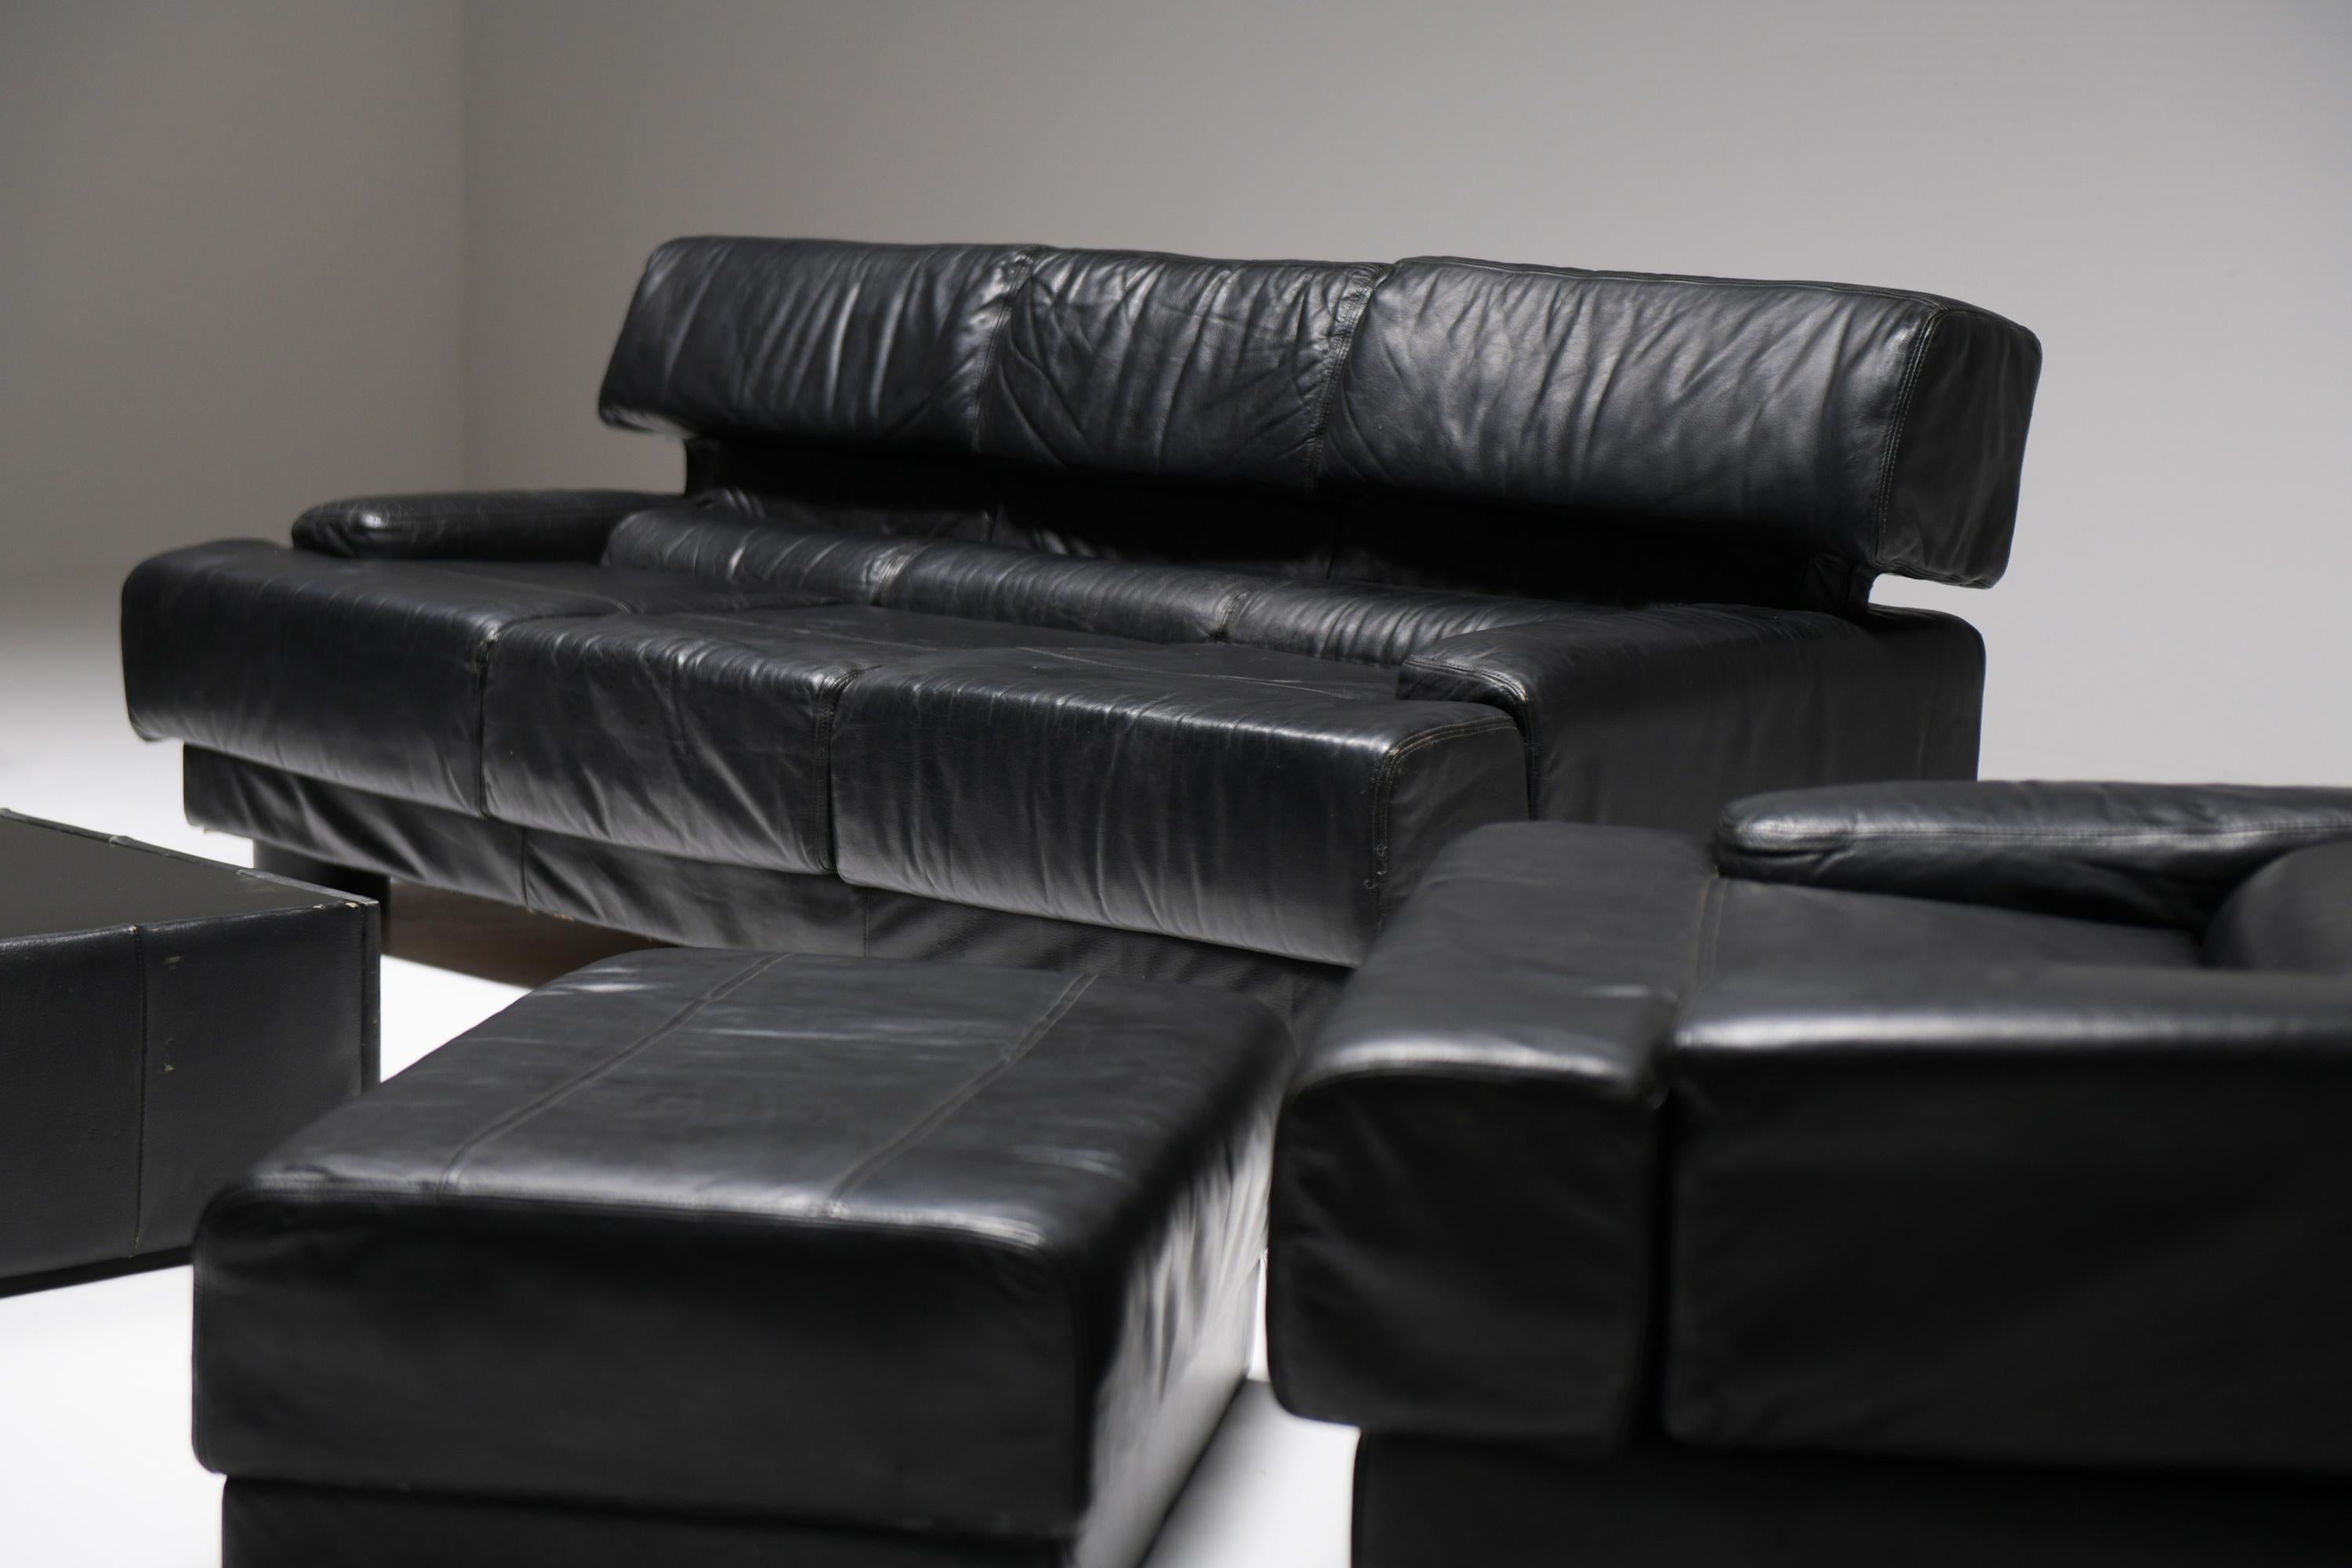 Stunning Percival Lafer sofa set in original black leather - Lafer S.A. - Brazil For Sale 4